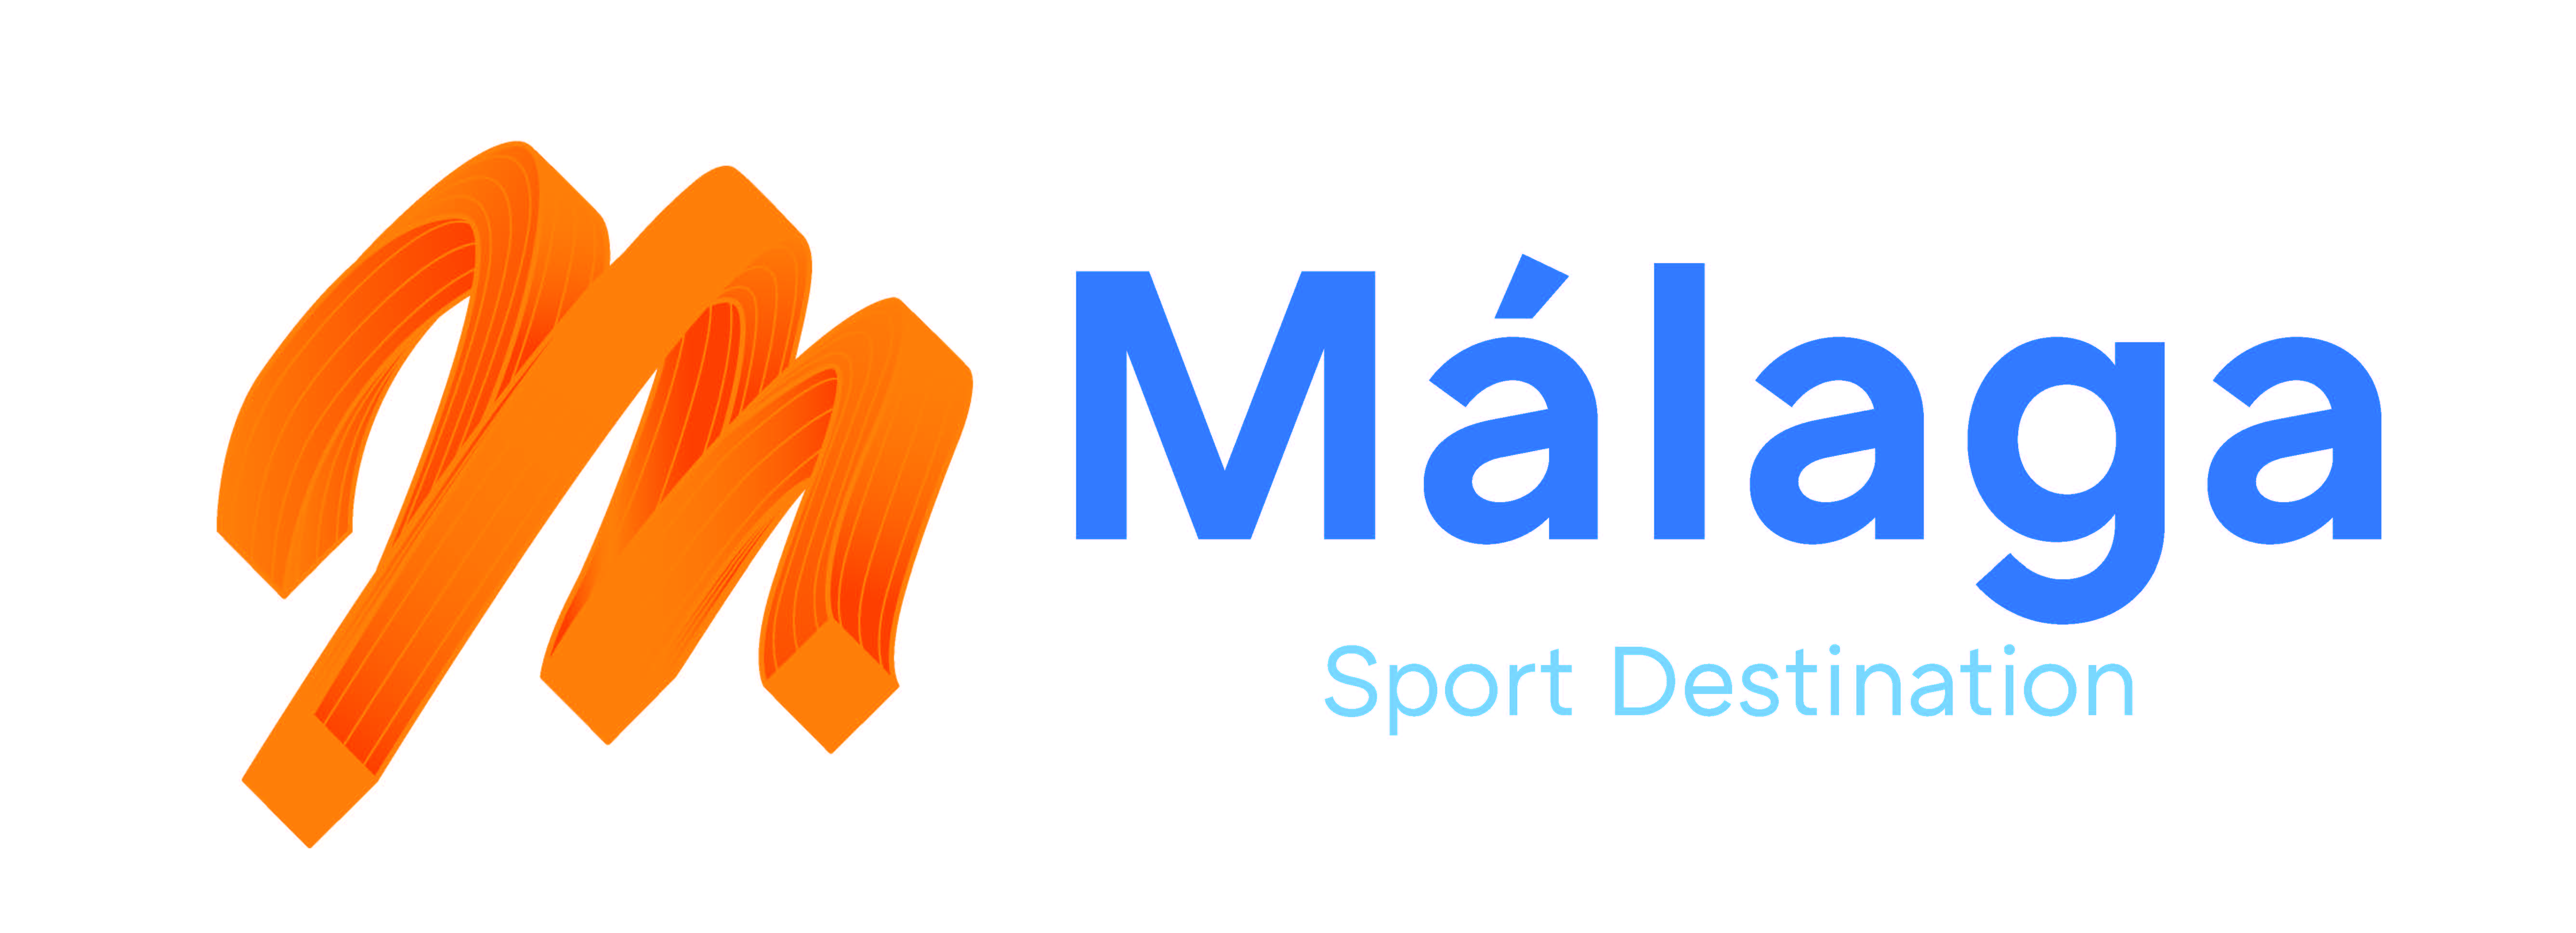 Malaga Sport Destination_Rectangular.jpg